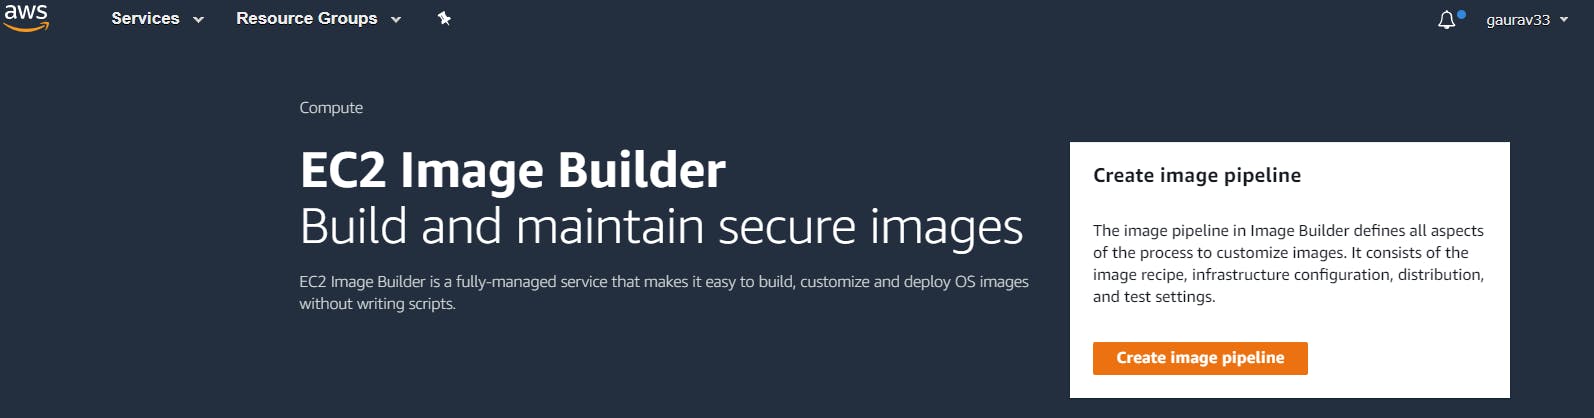 EC2 Image Builder Main Page